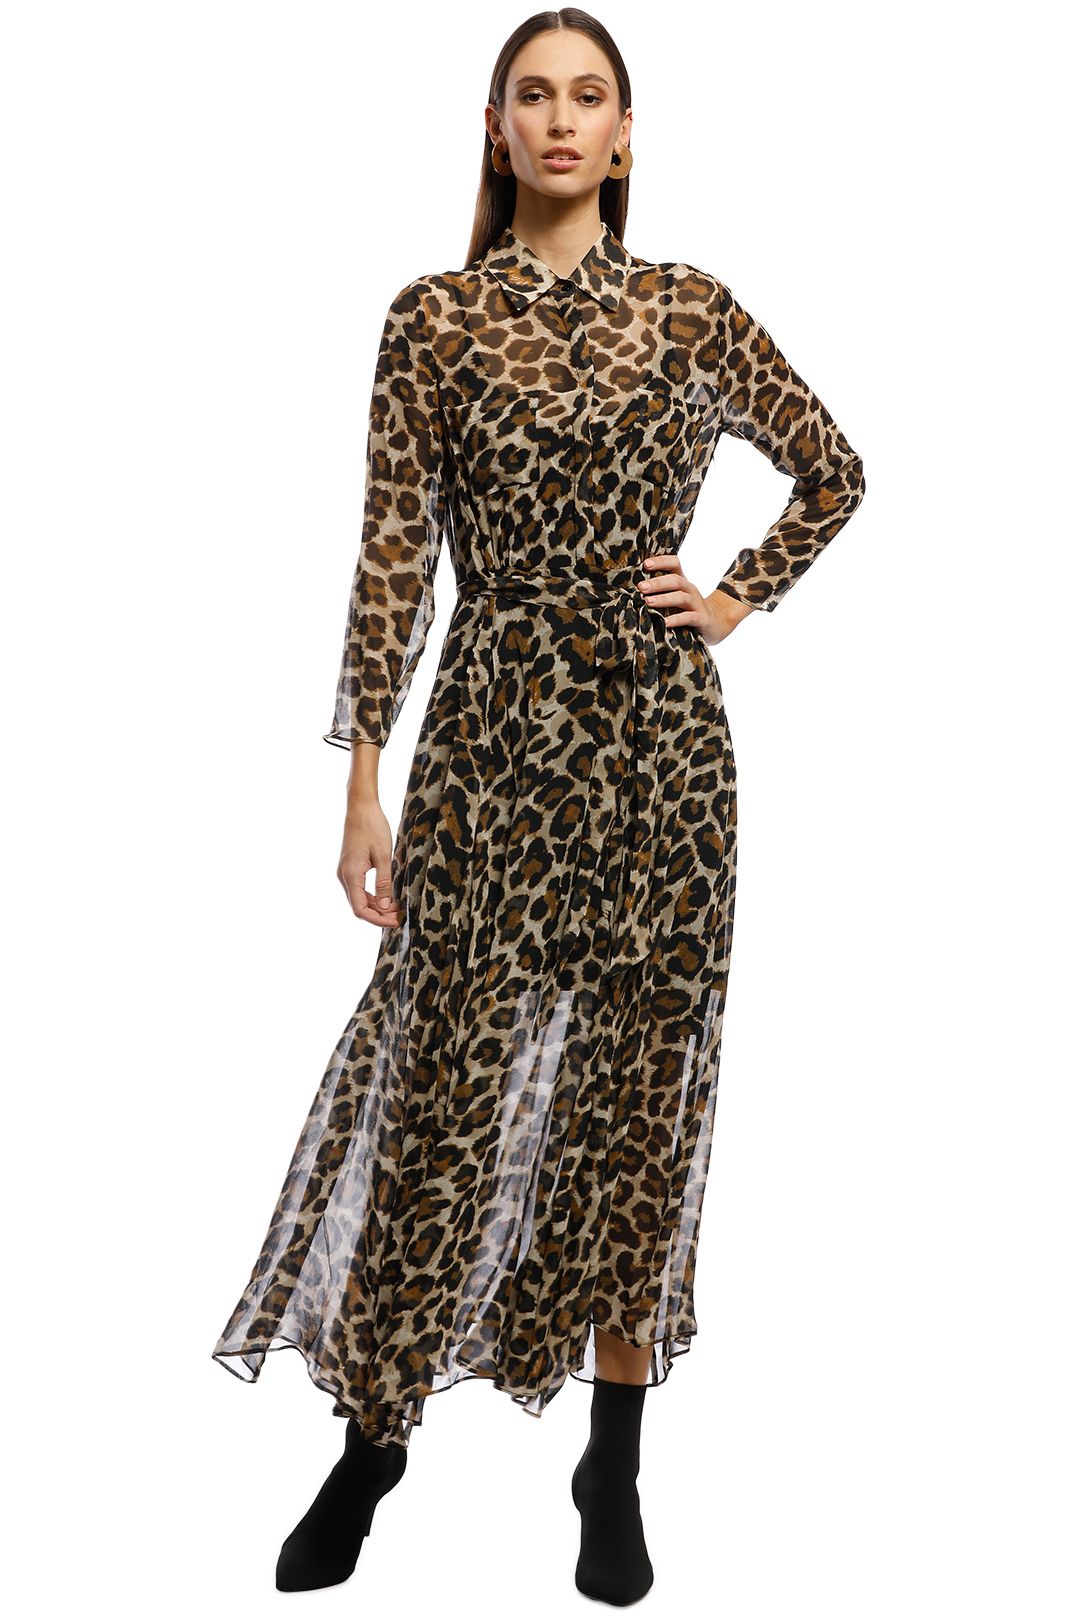 Husk - Aria Dress - Leopard Print - Brown - Front